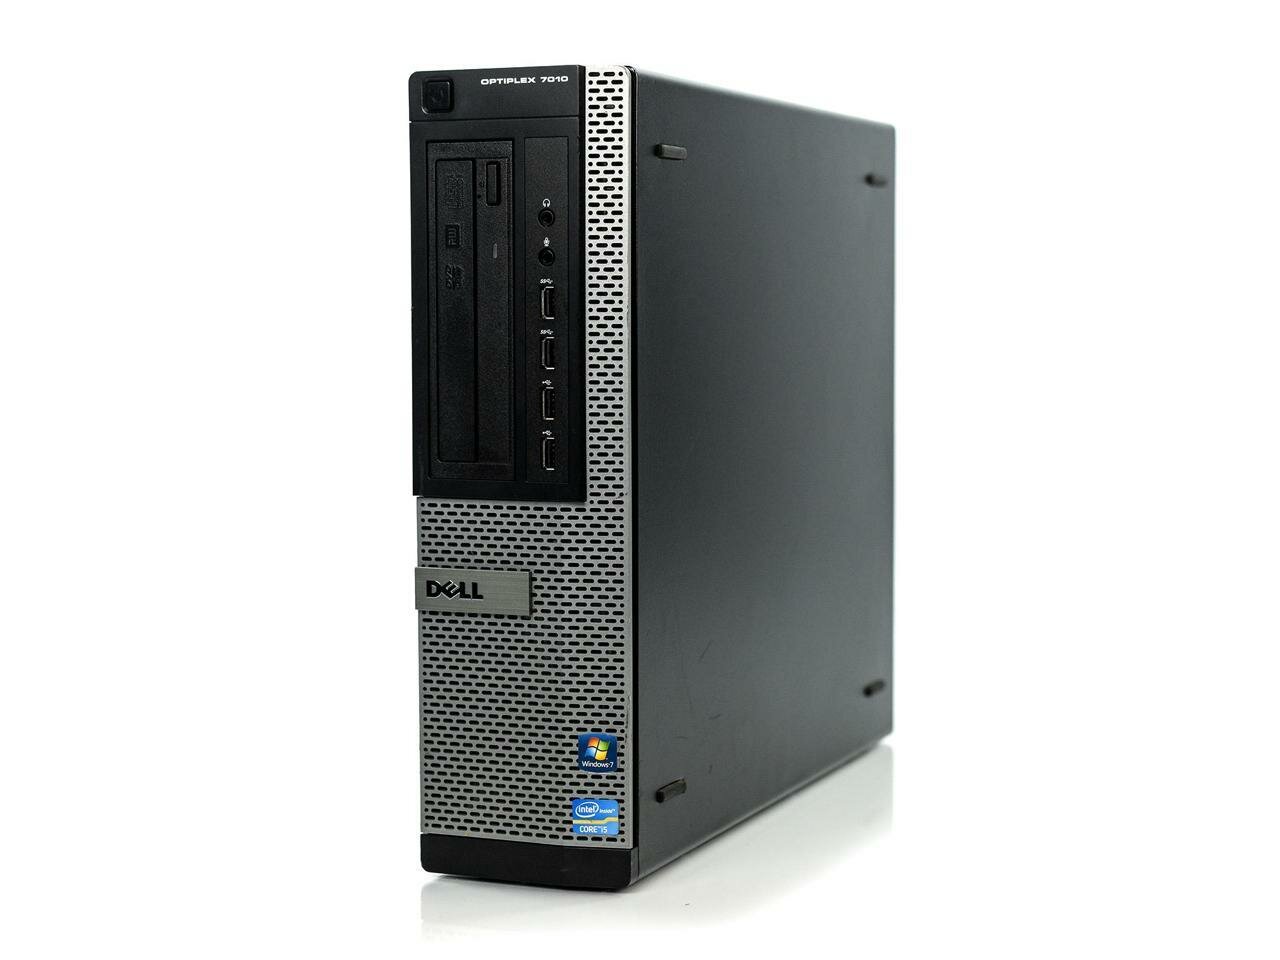 Системный блок, компьютер Dell Optiplex 7010 DT - Core i7-3770, 8GB RAM, 500GB HDD